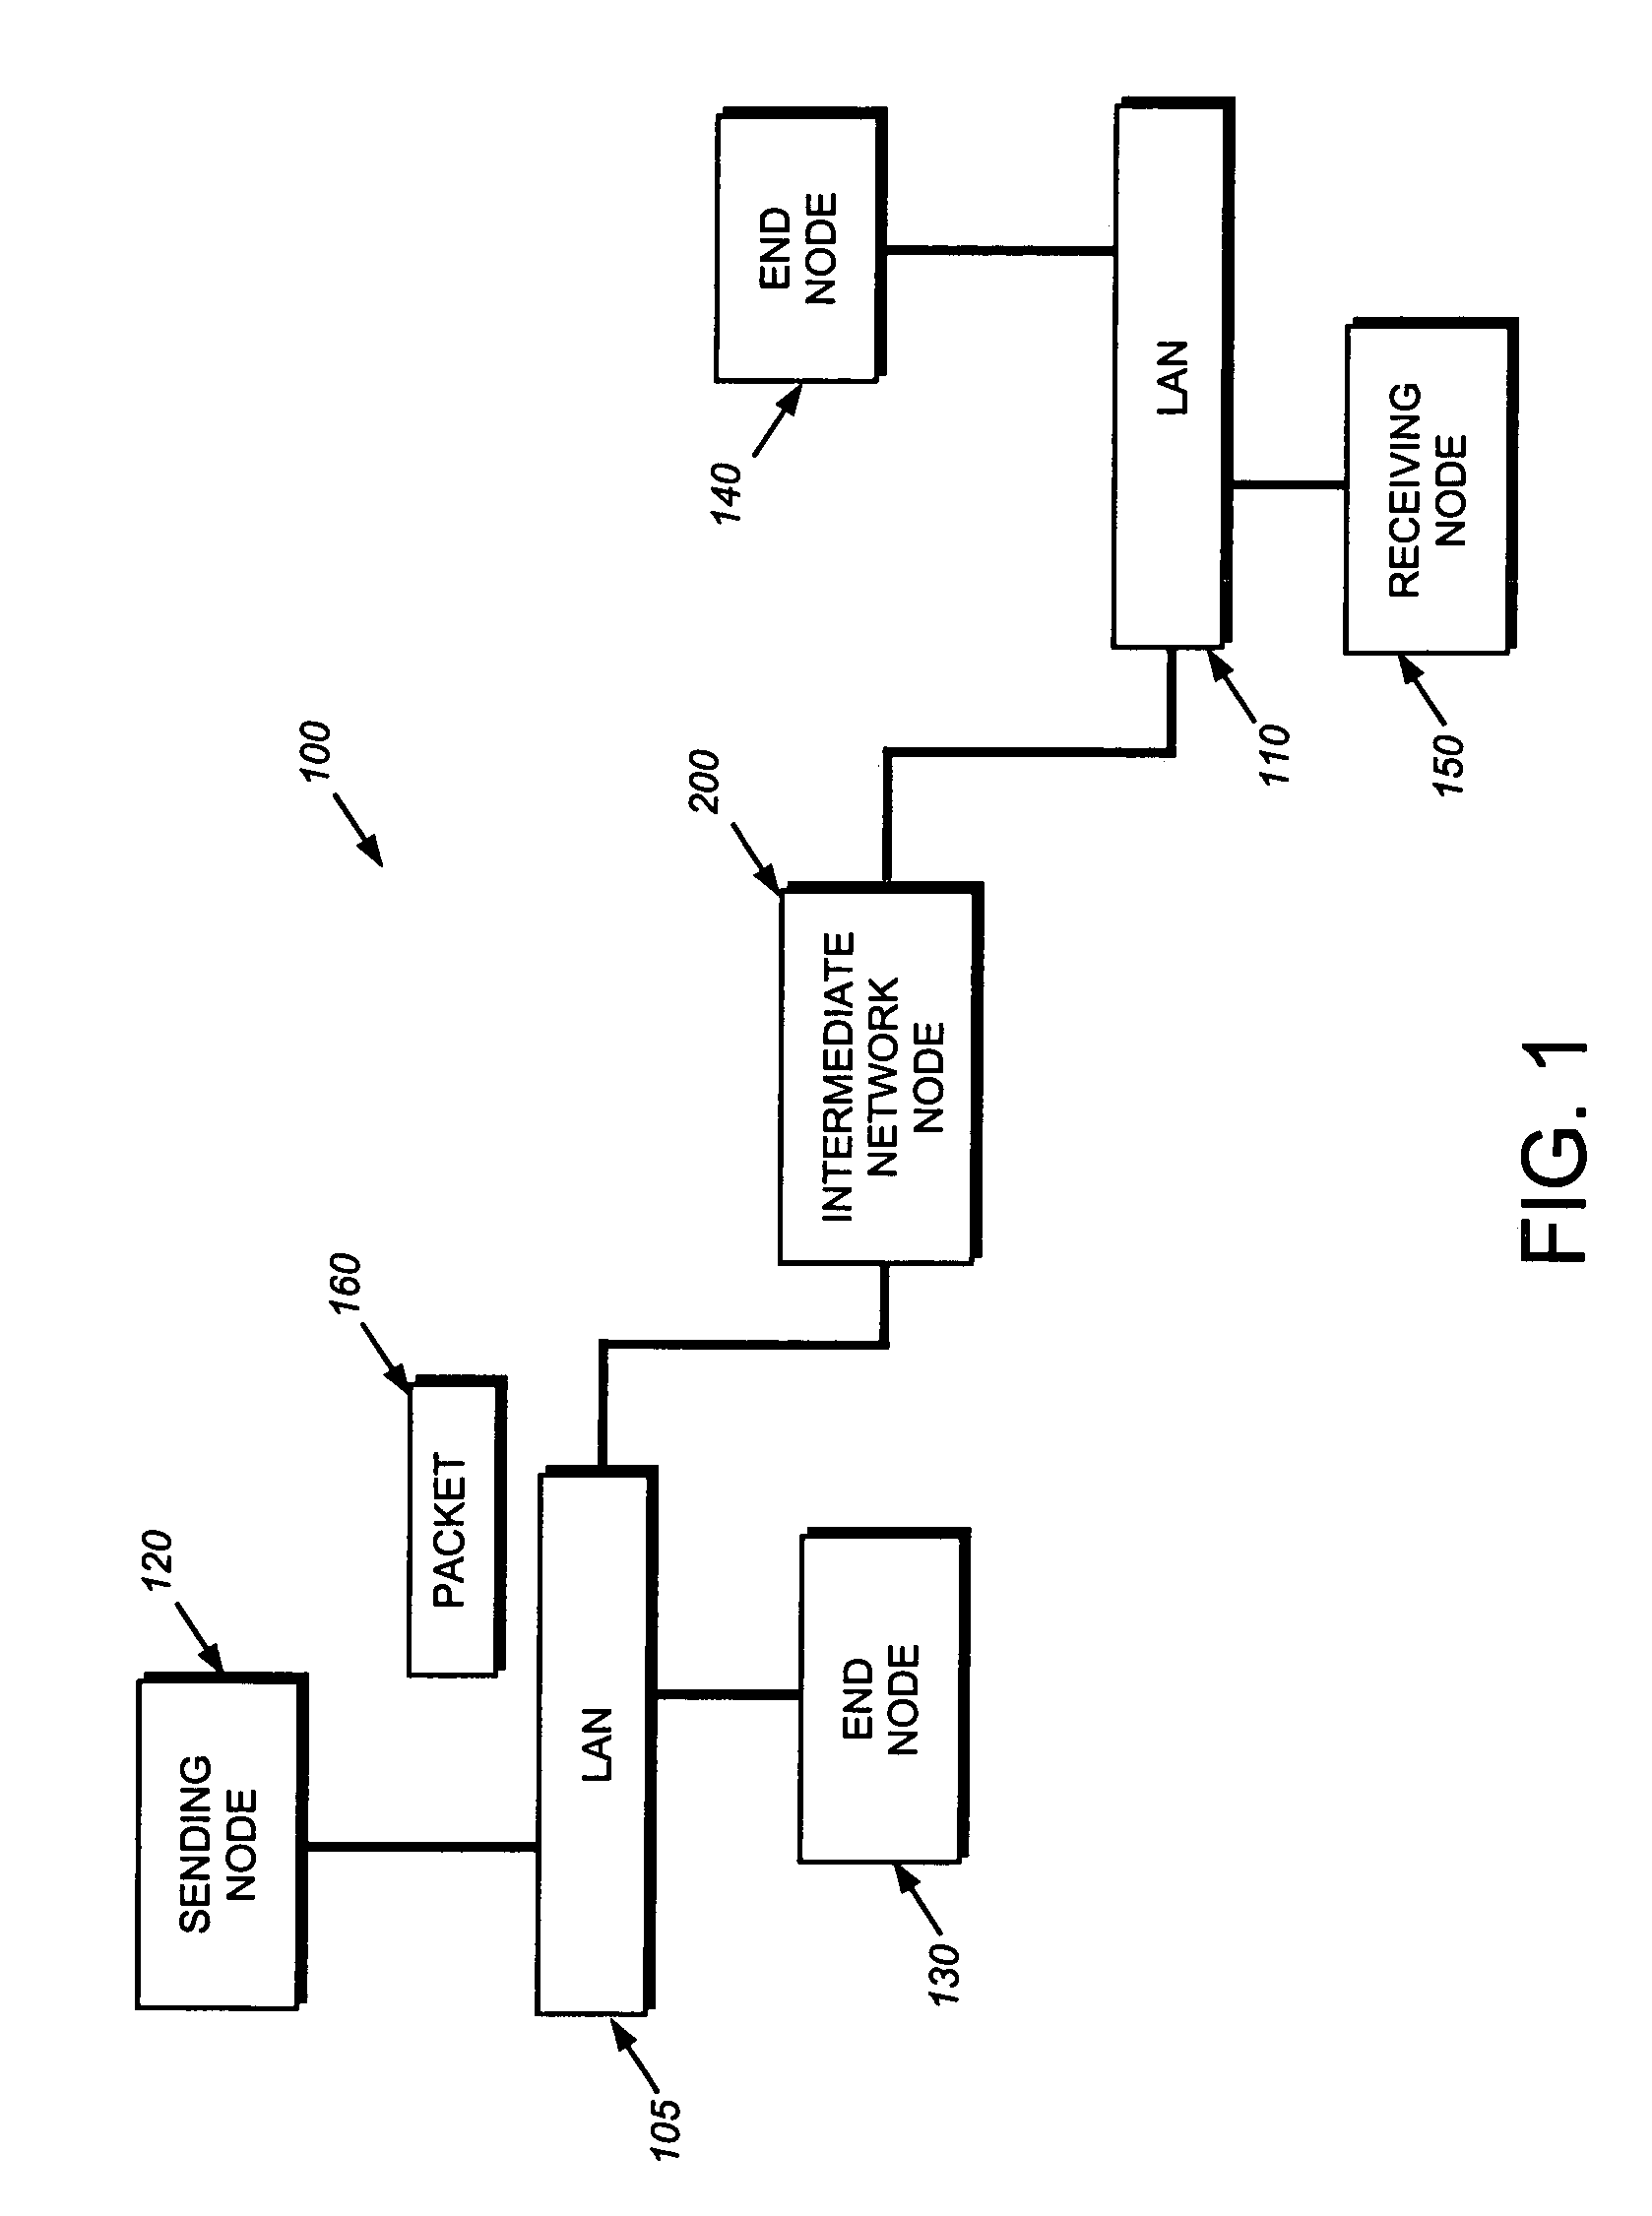 Buffer management technique for a hypertransport data path protocol